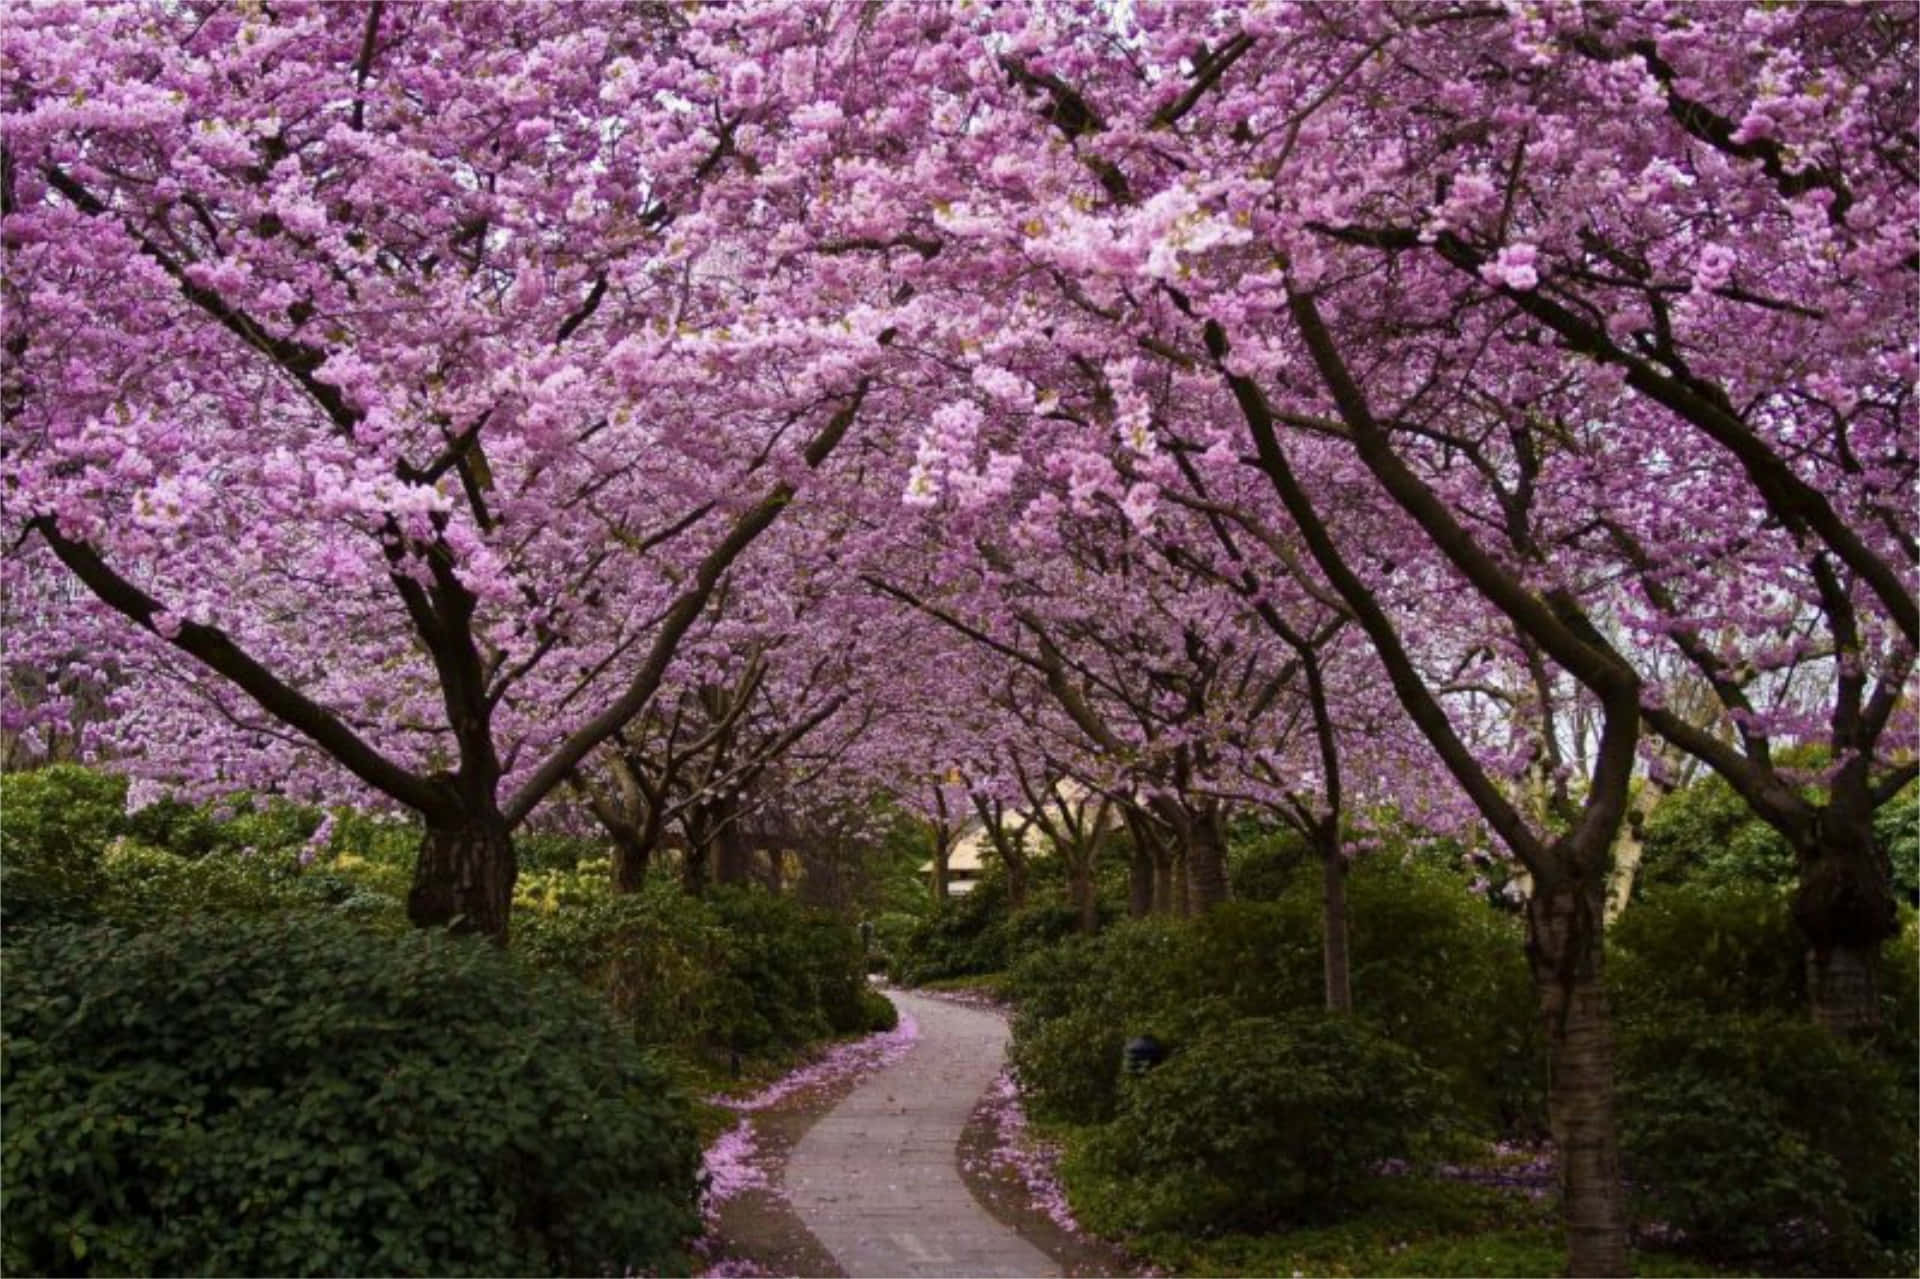 Enjoy the tranquility of a beautiful sakura tree